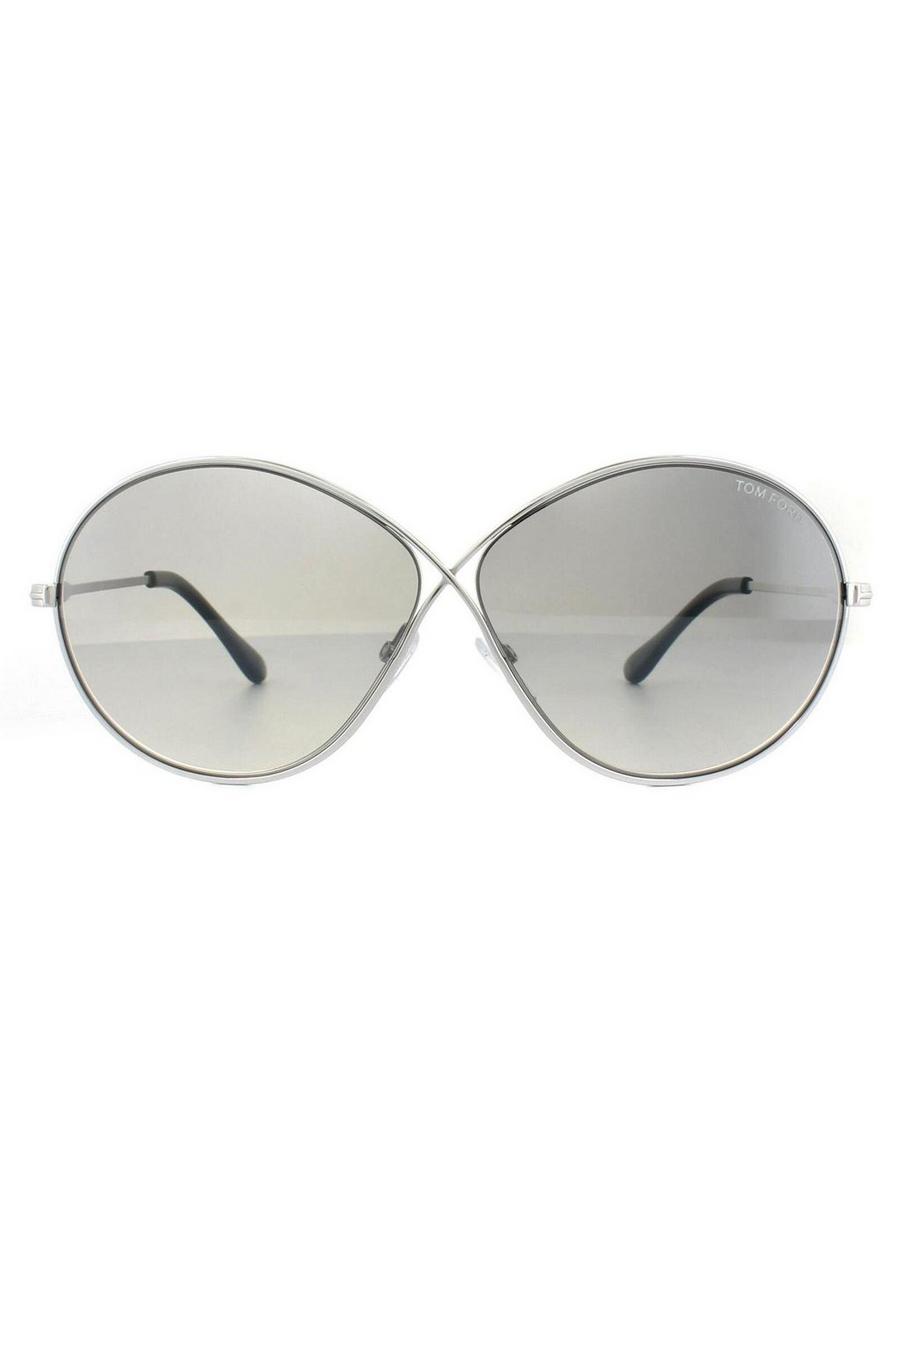 Silver Oval Shiny Rodium Smoke Grey Mirror Sunglasses